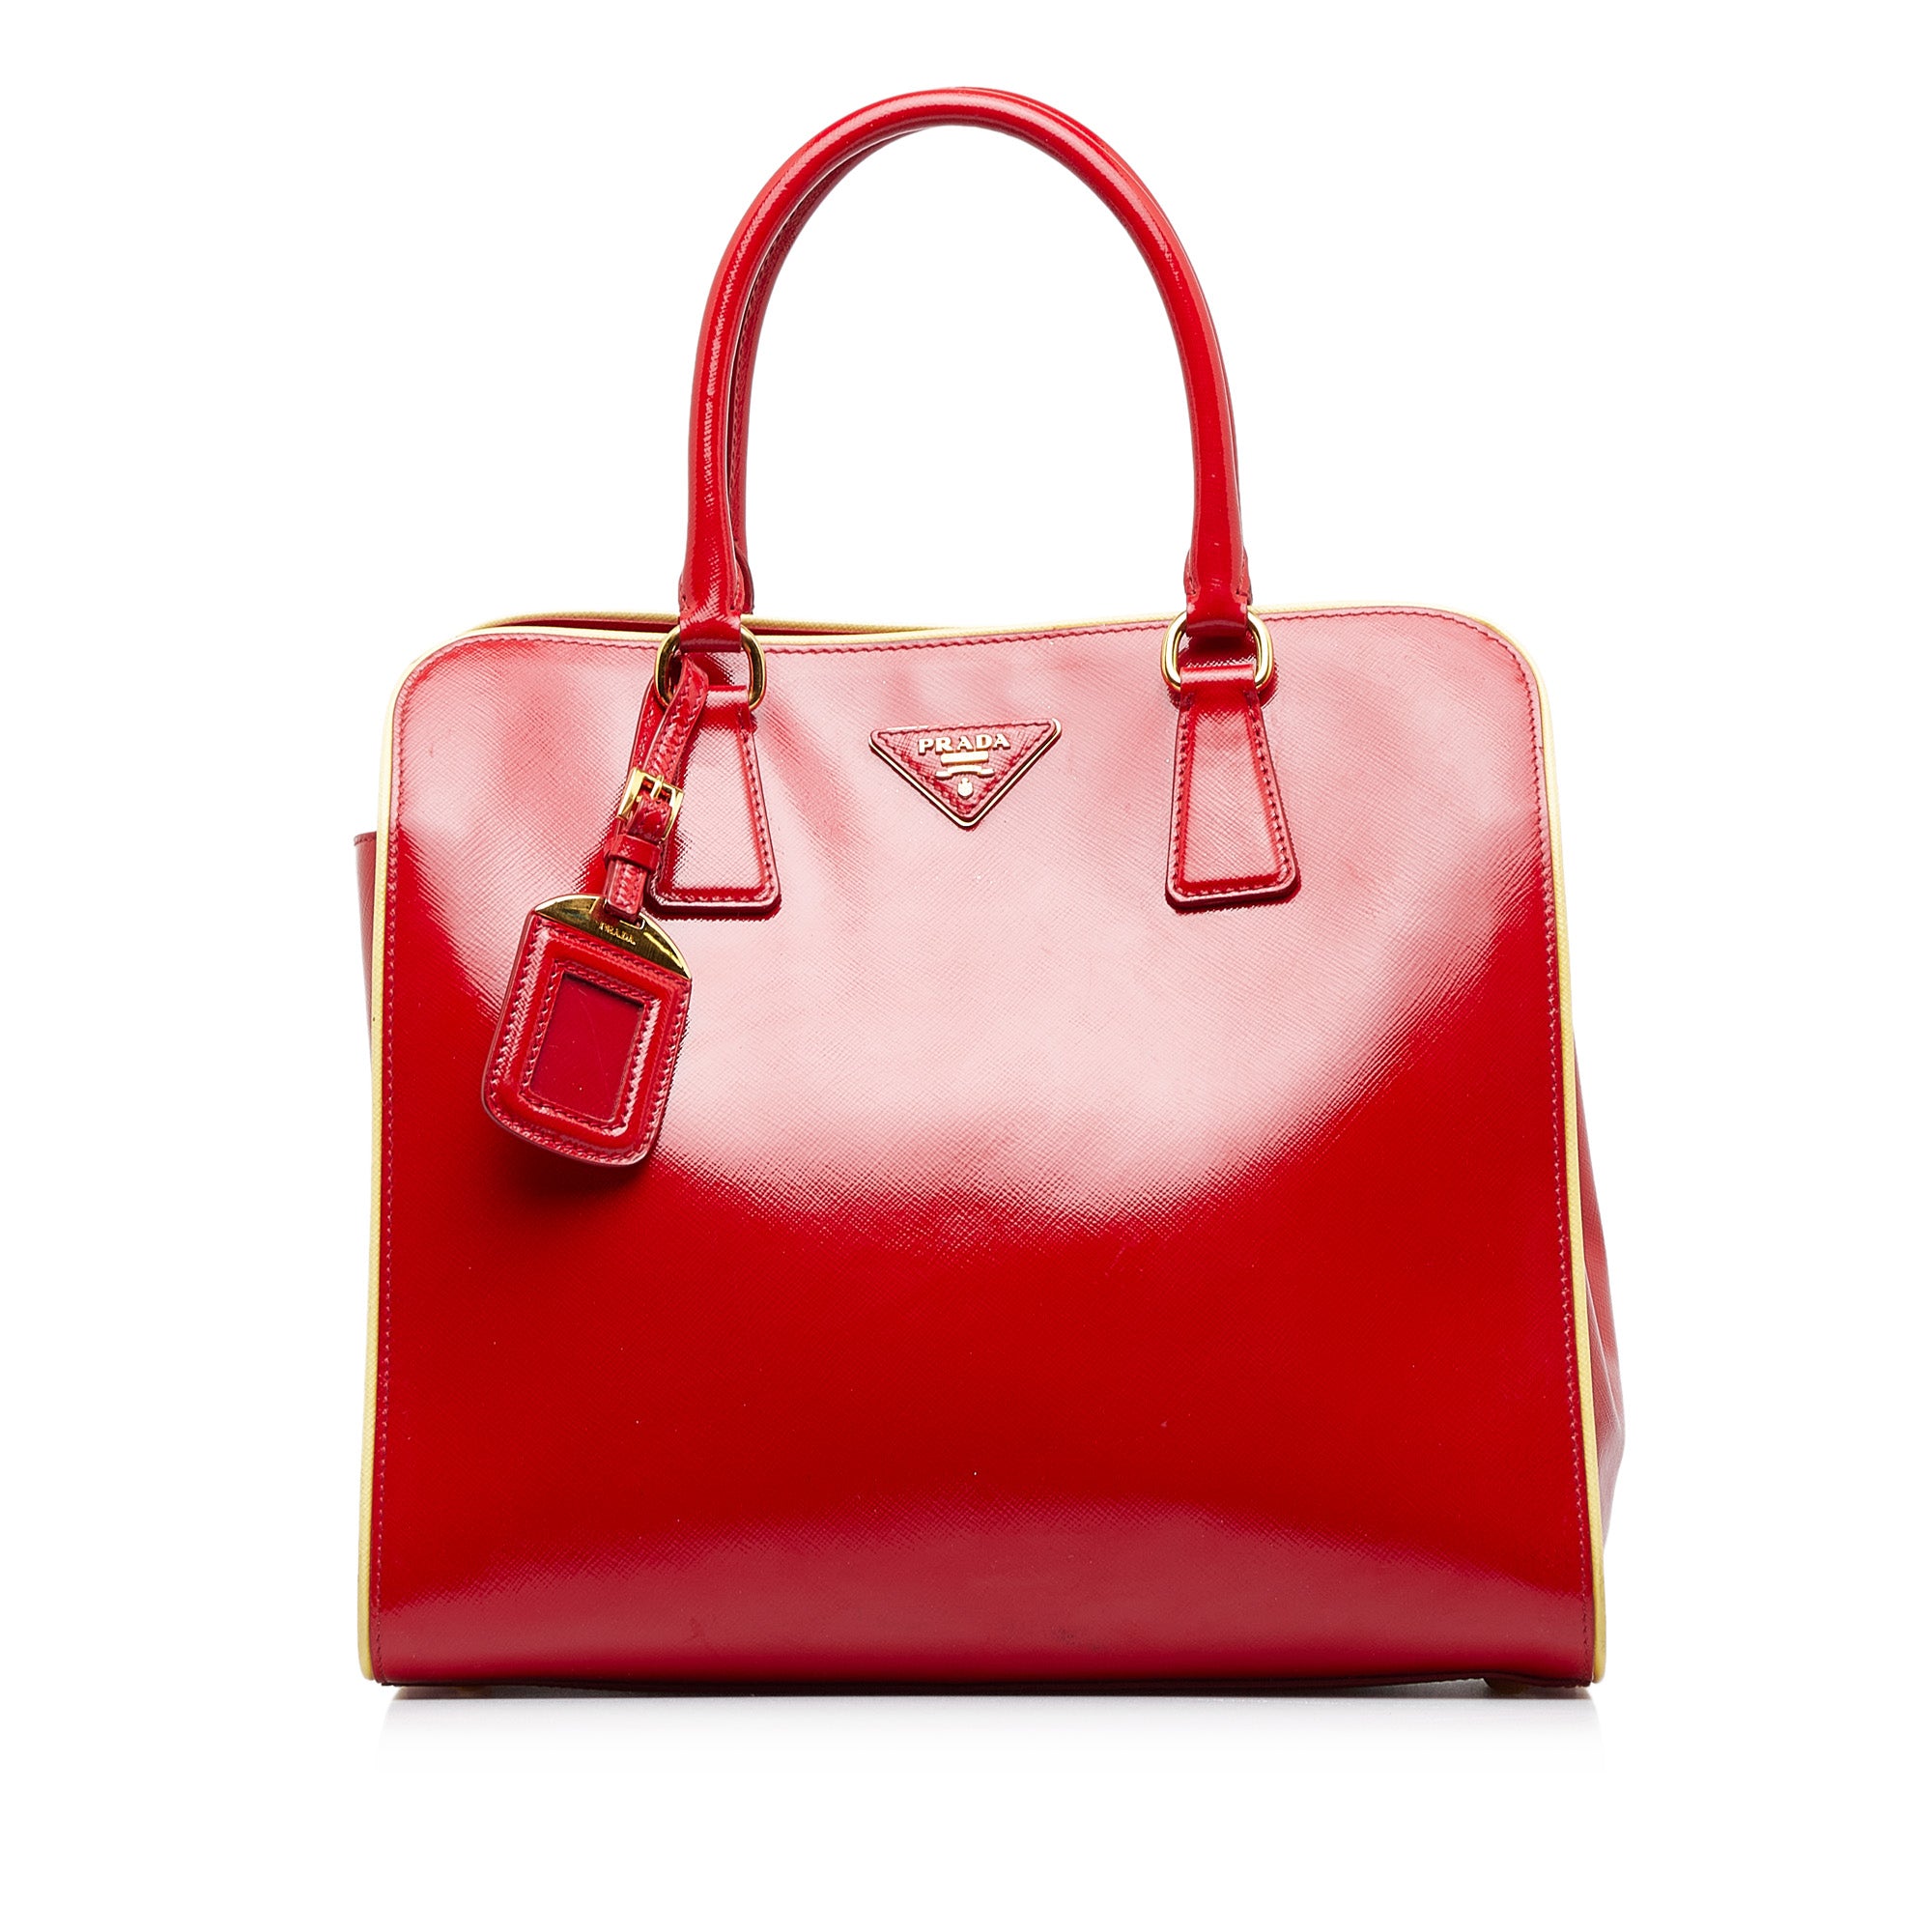 Prada Red Leather Bag